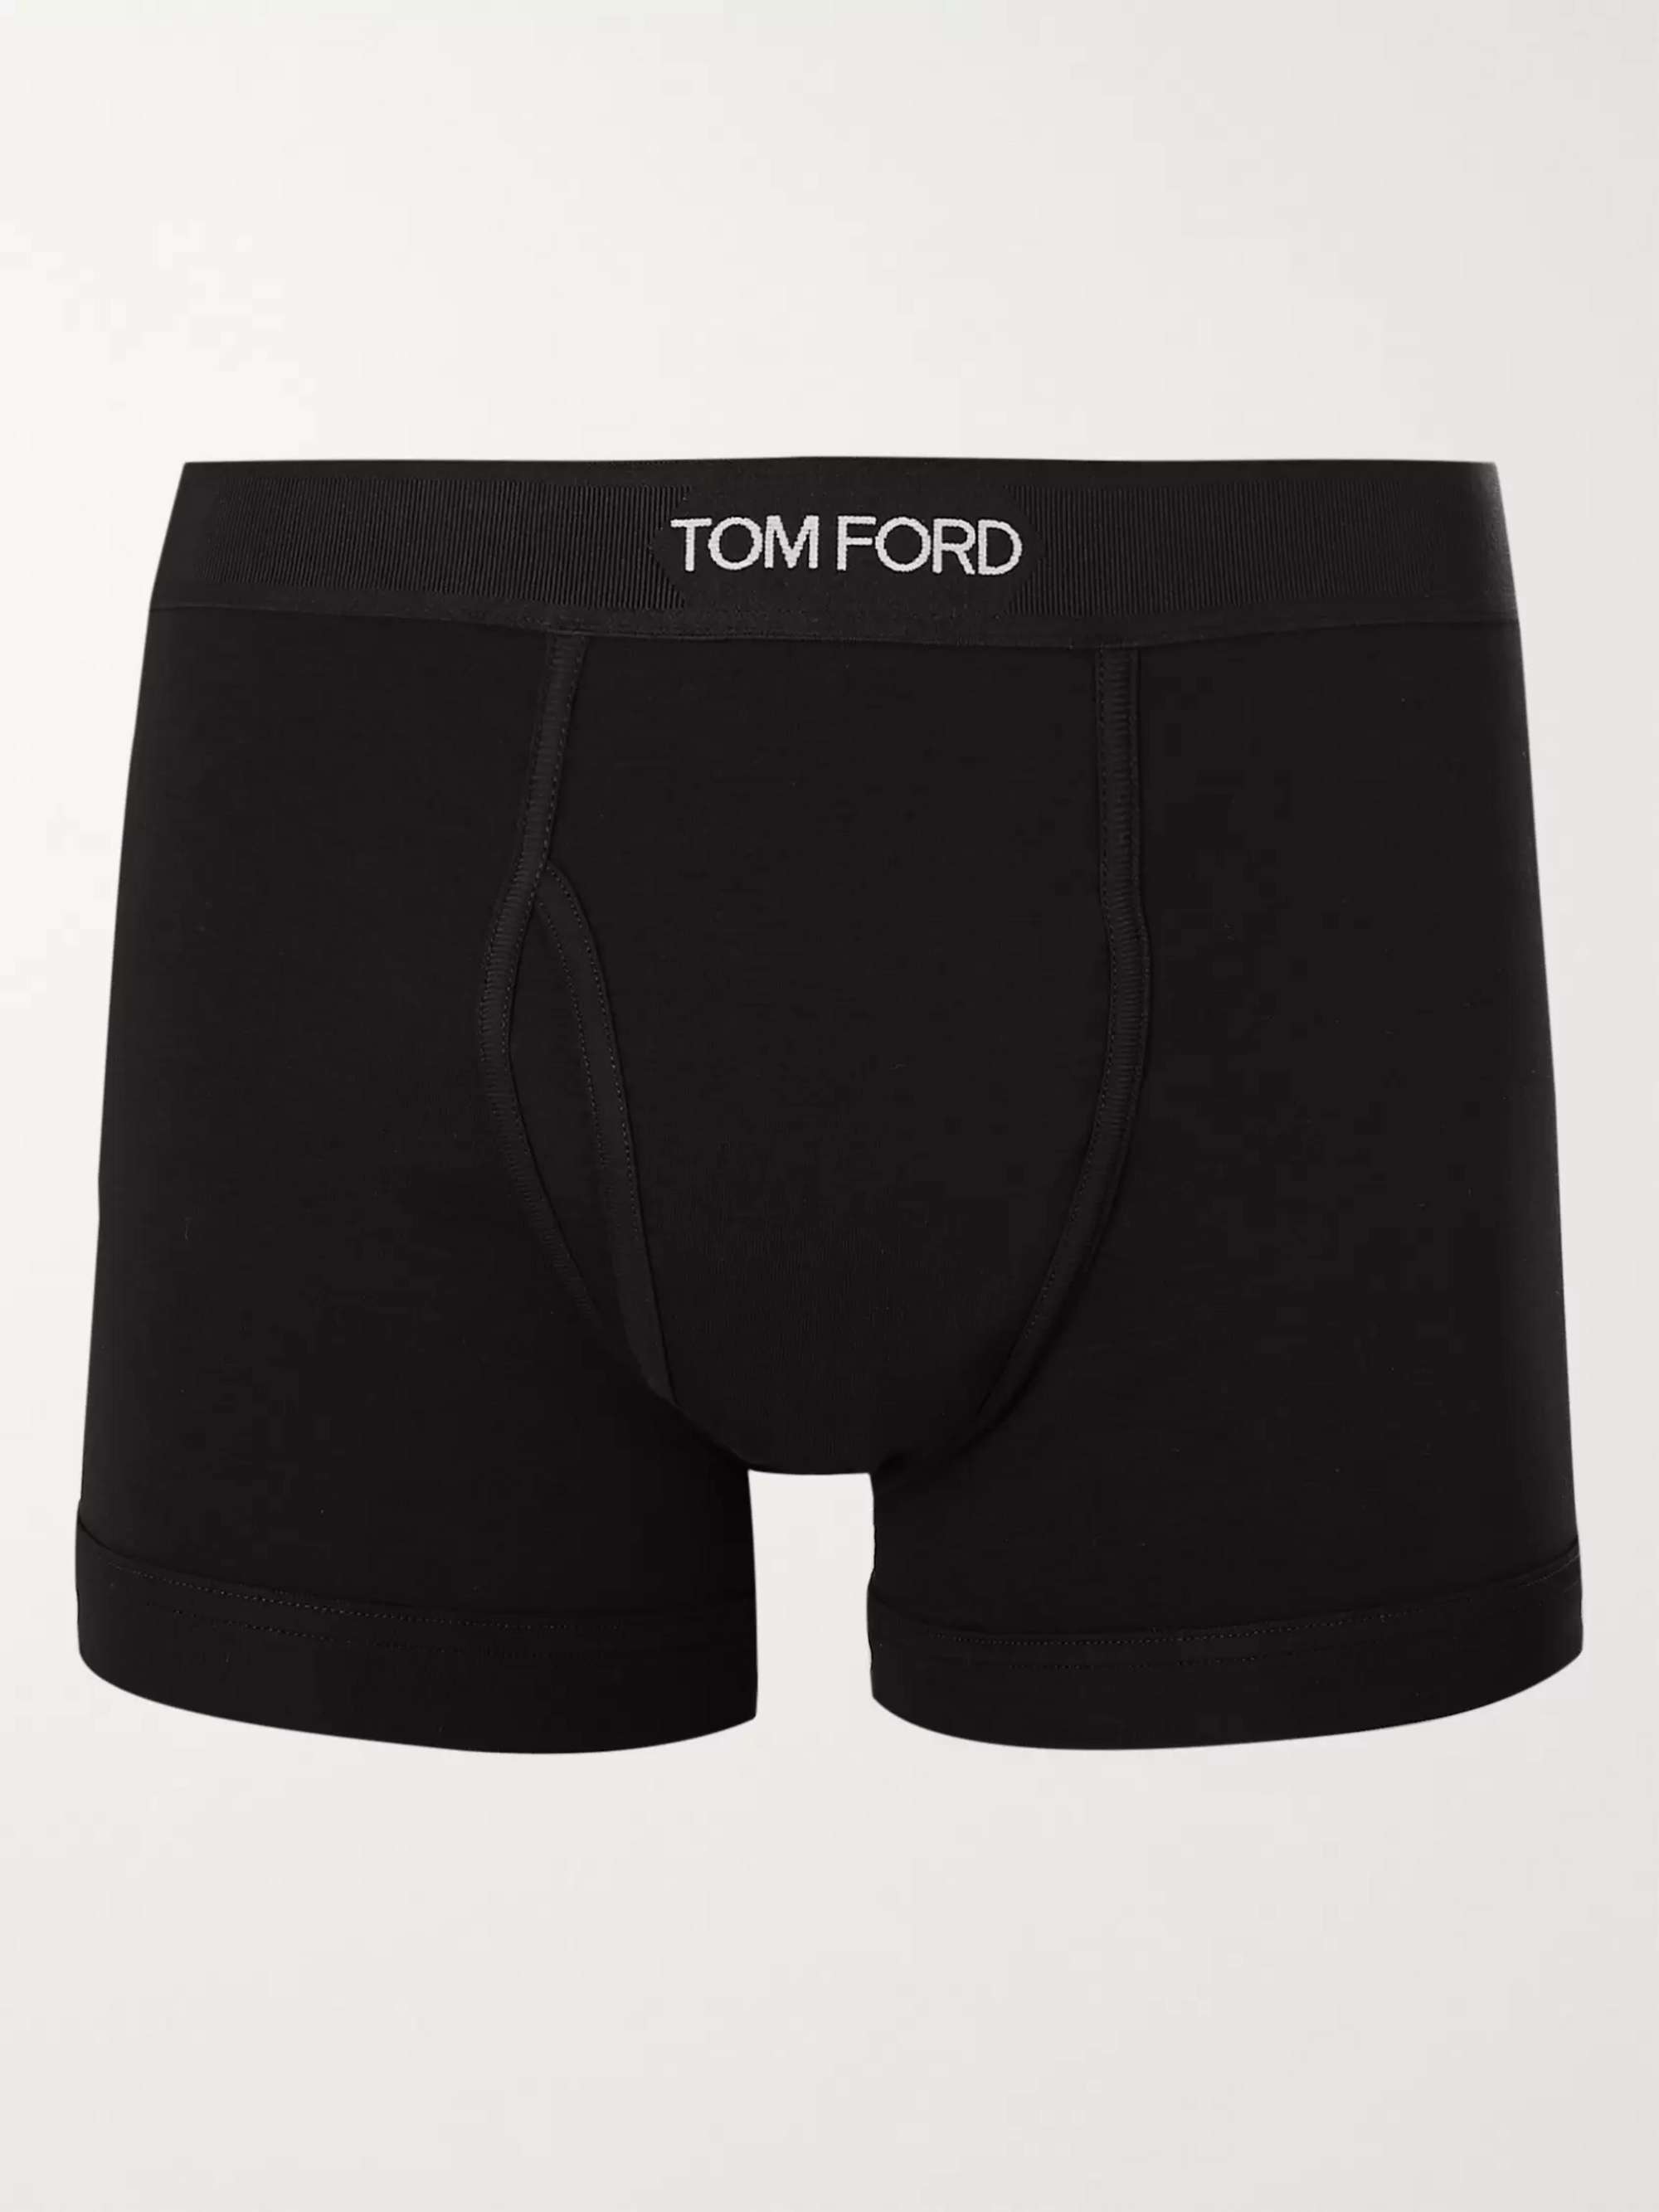 TOM FORD Stretch-Cotton Boxer Briefs for Men